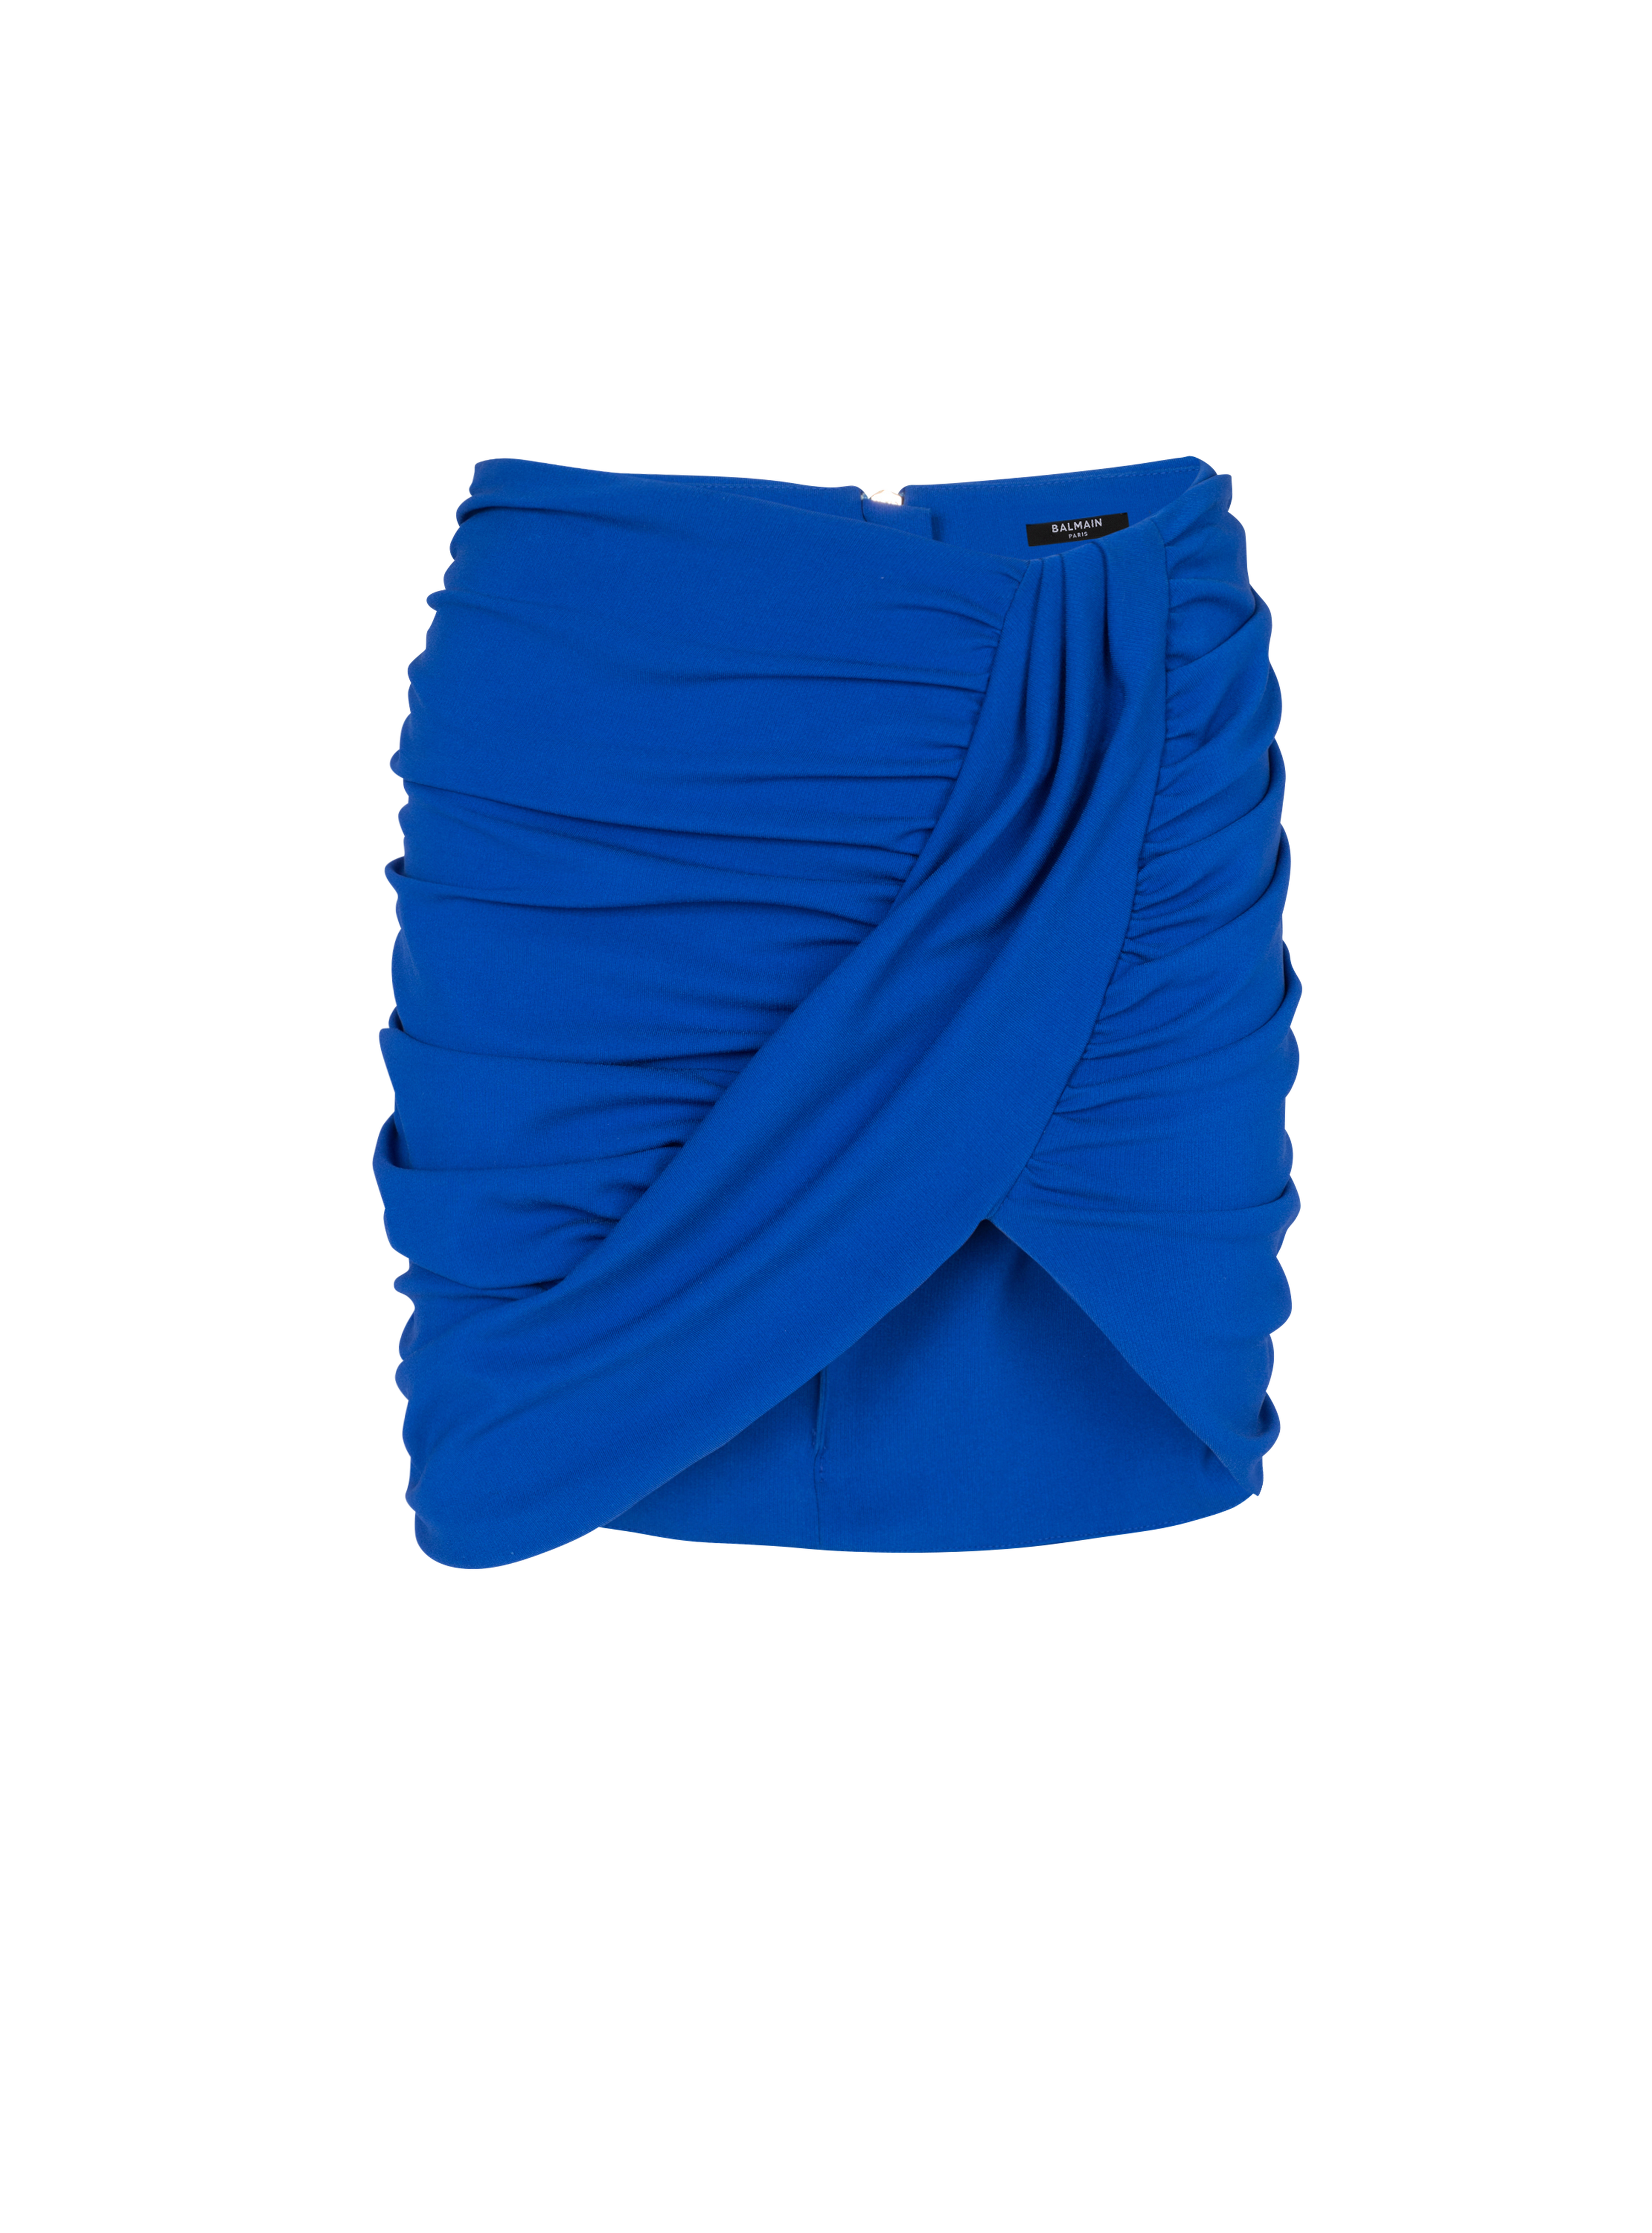 Draped jersey skirt, blue